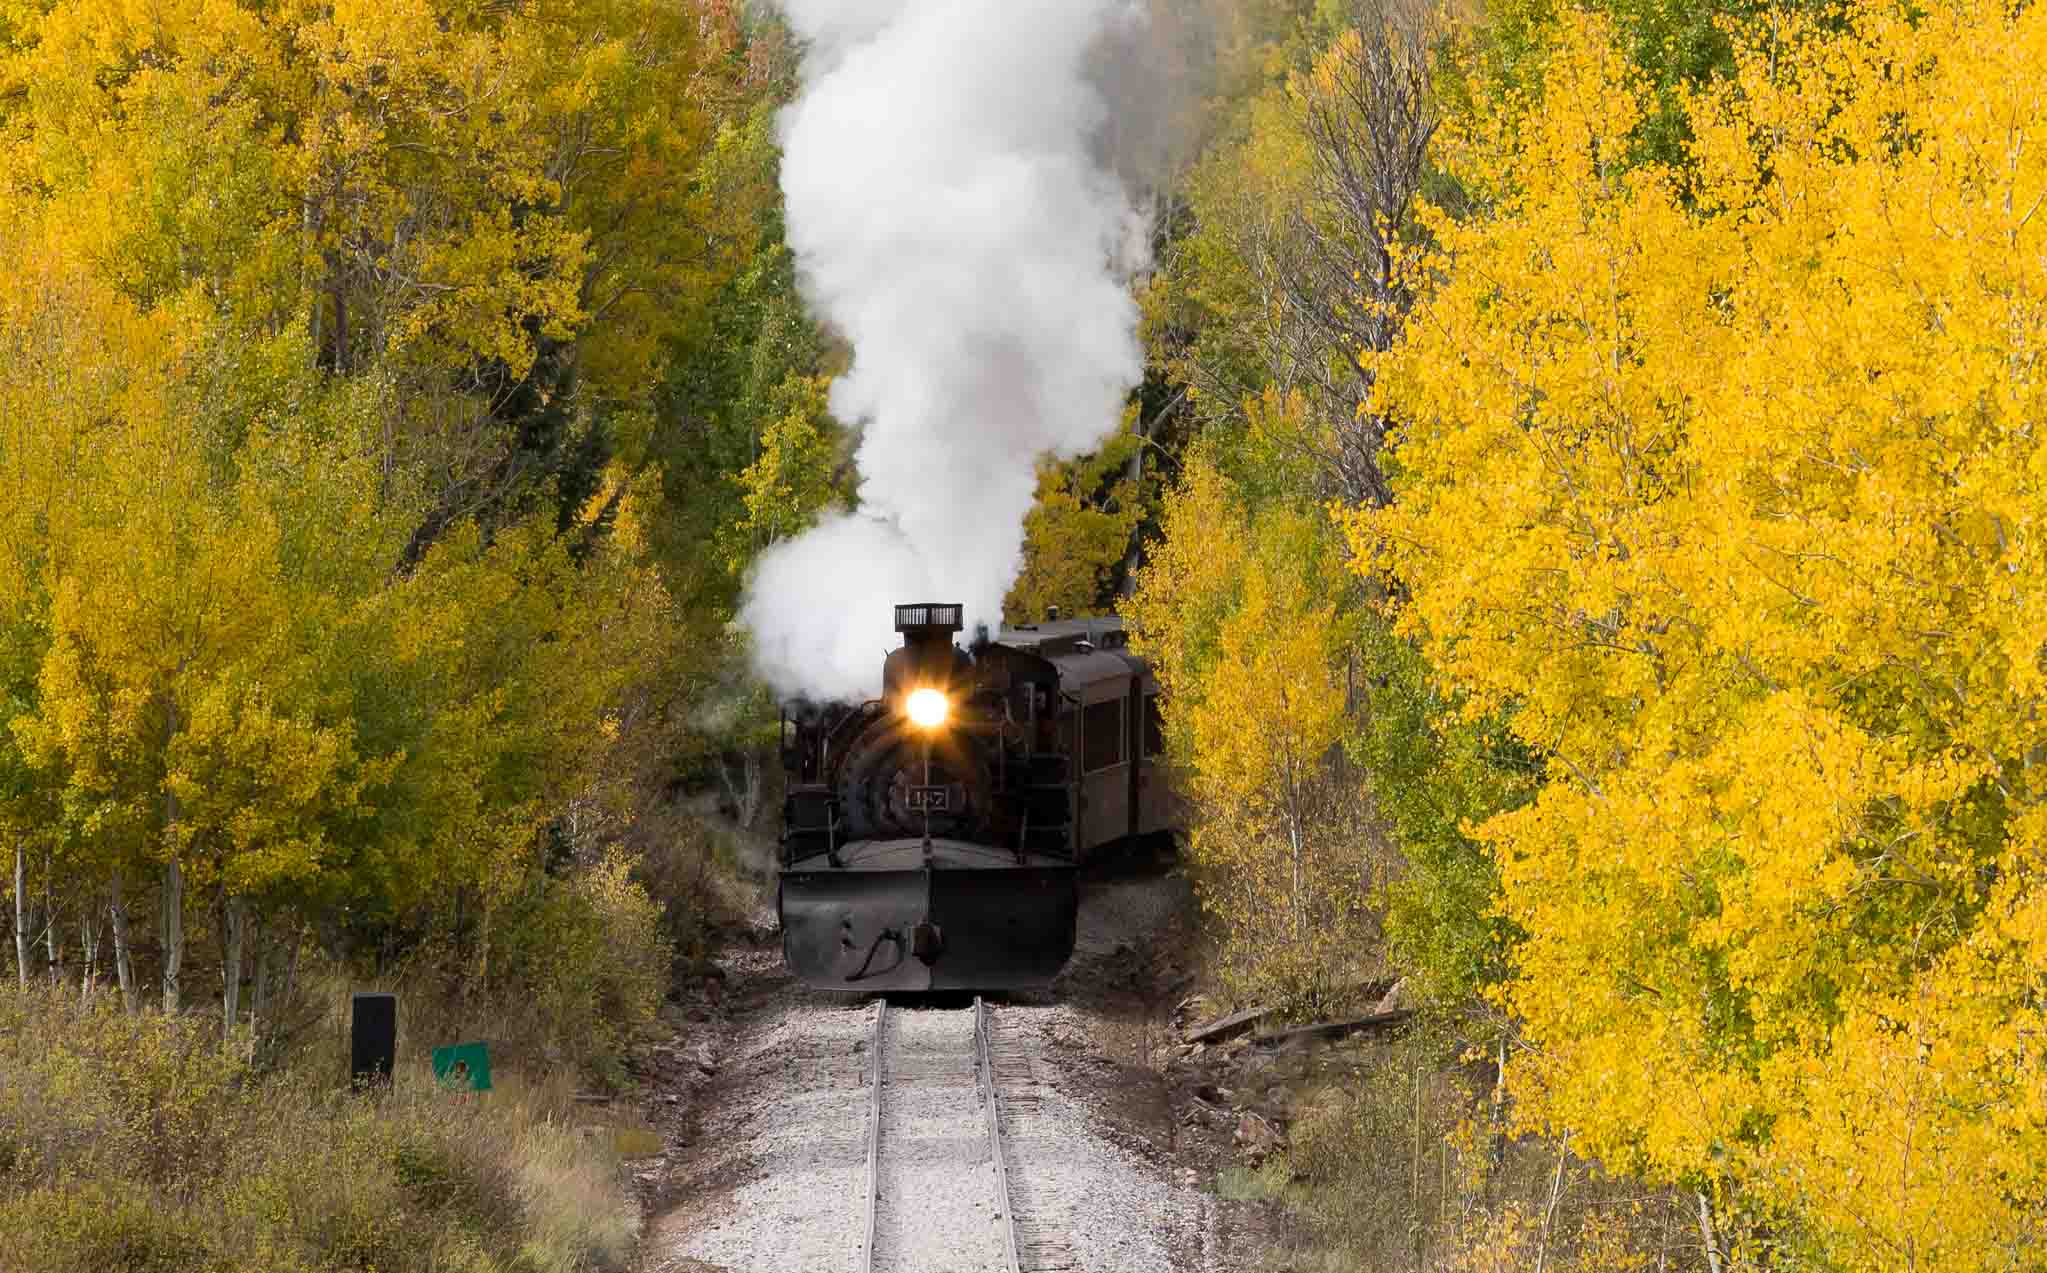 Cumbres & Toltec excursion train in aspens north of Chama NM, October 8, 2014